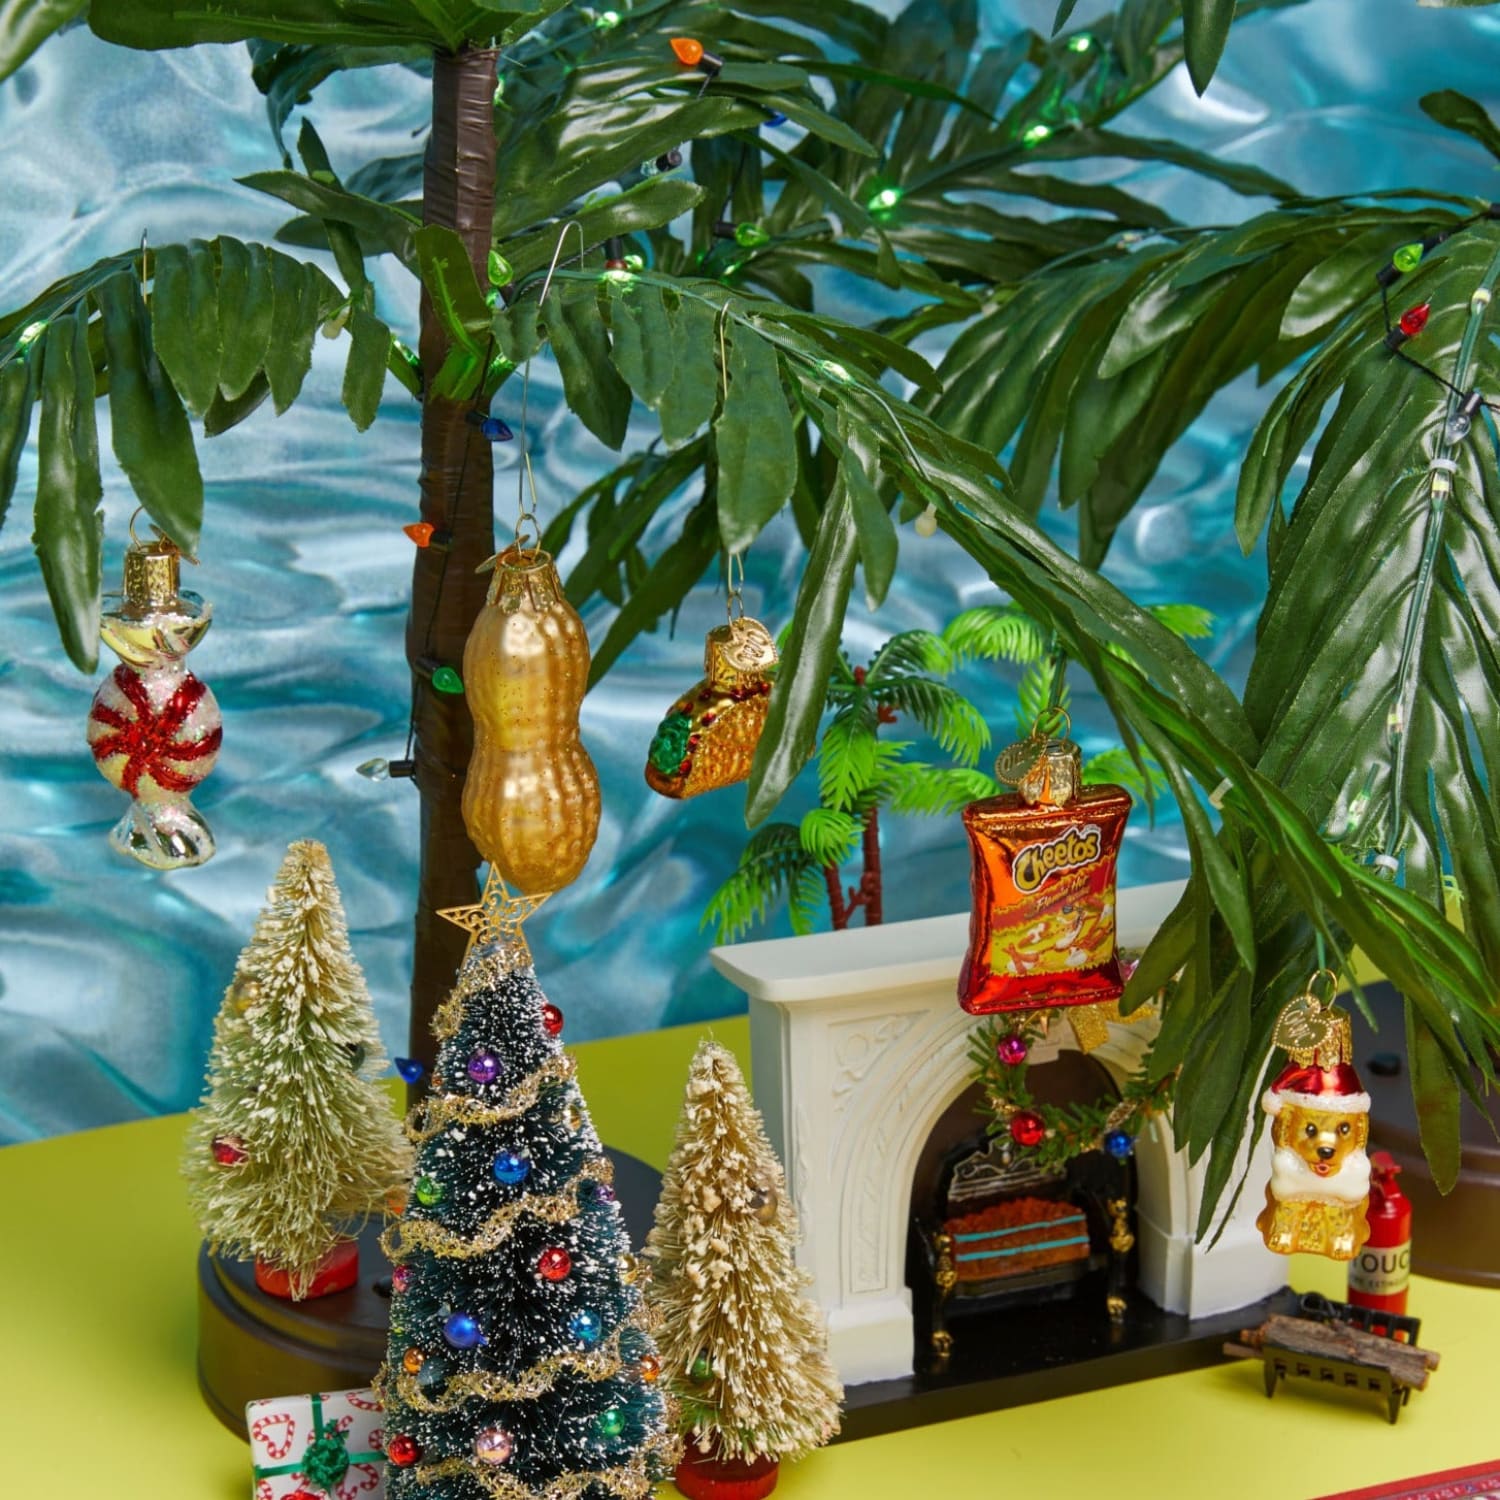 Mini Taco Ornament Christmas Ornaments - Fake Food - Novelty